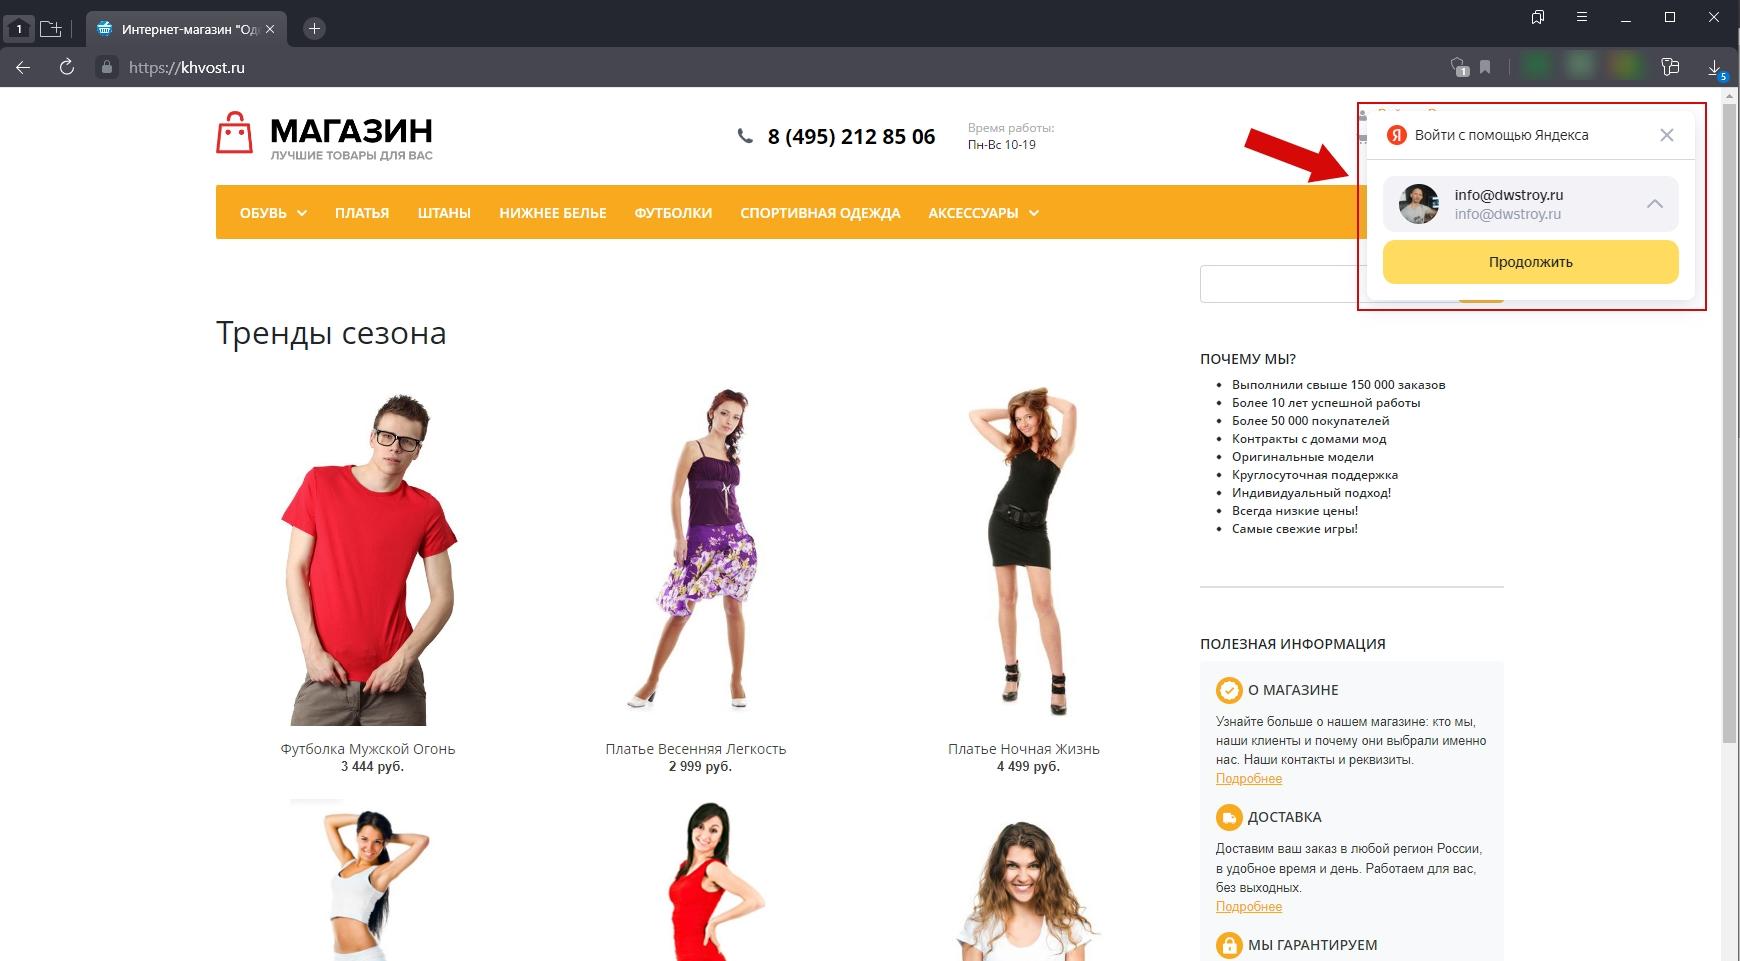 Dwstroy: Авторизация через Yandex (OAuth 2.0)